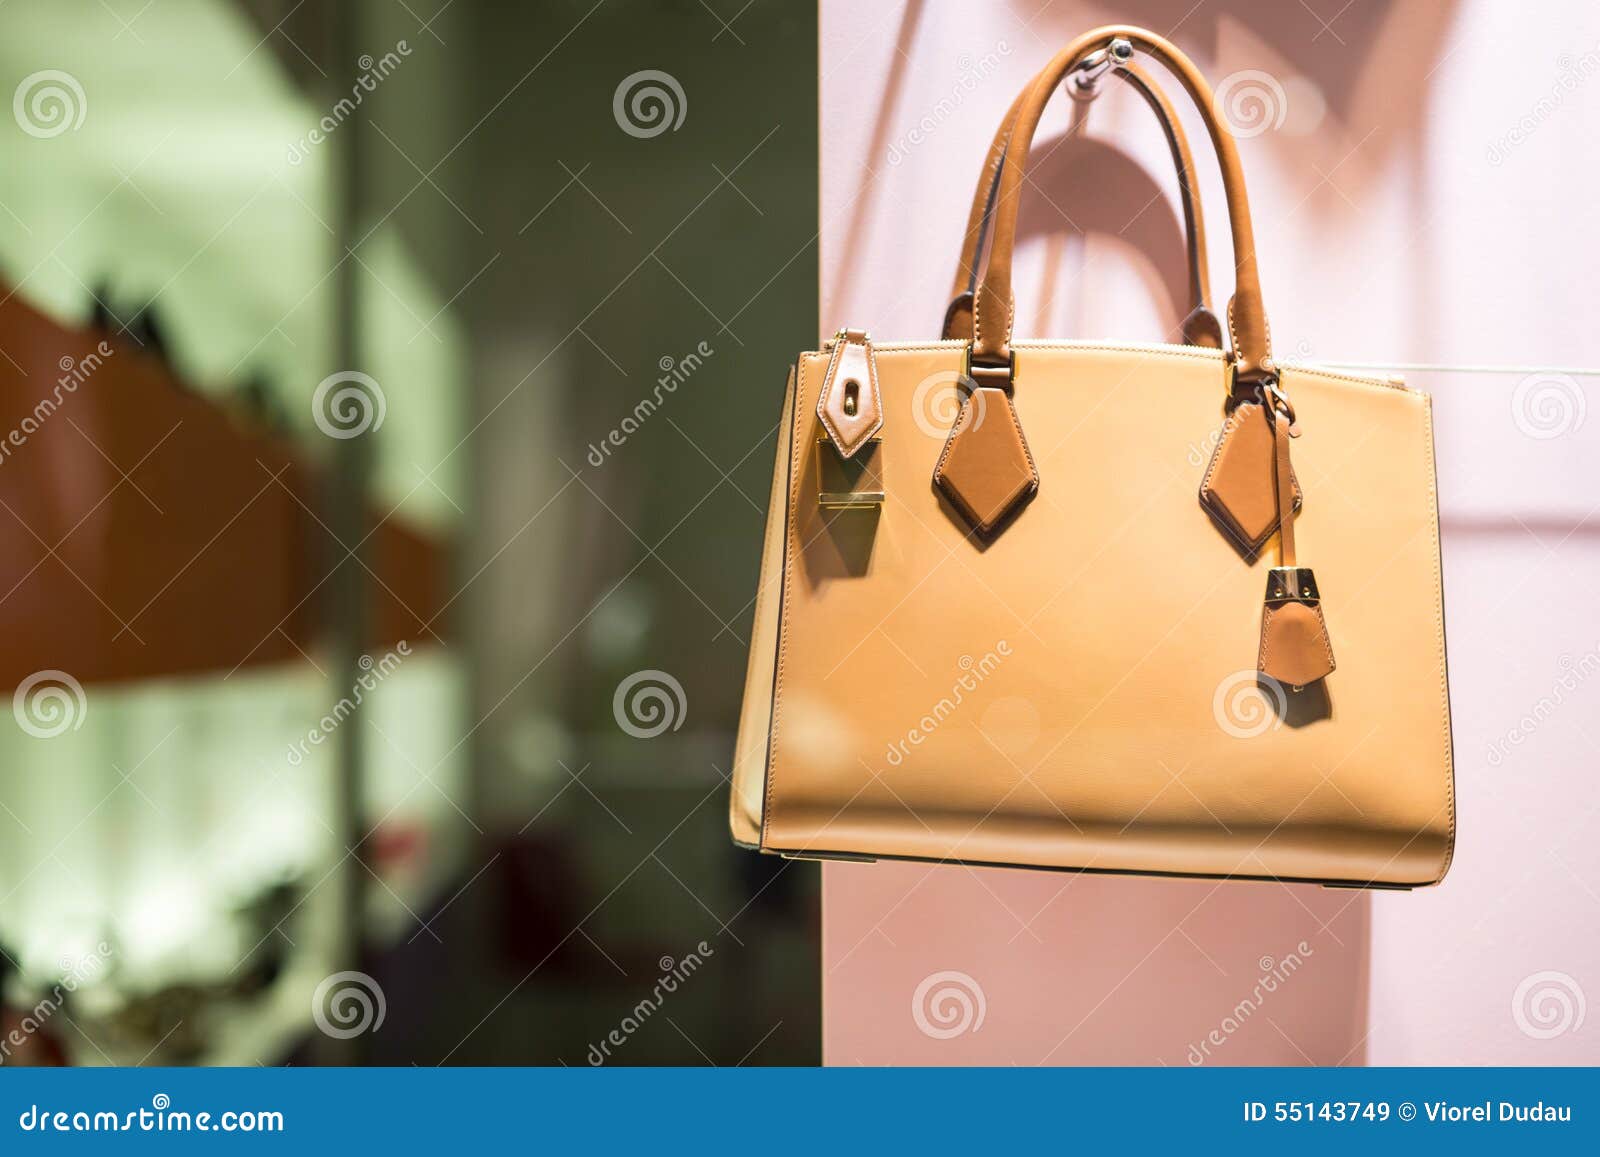 luxury handbag in store